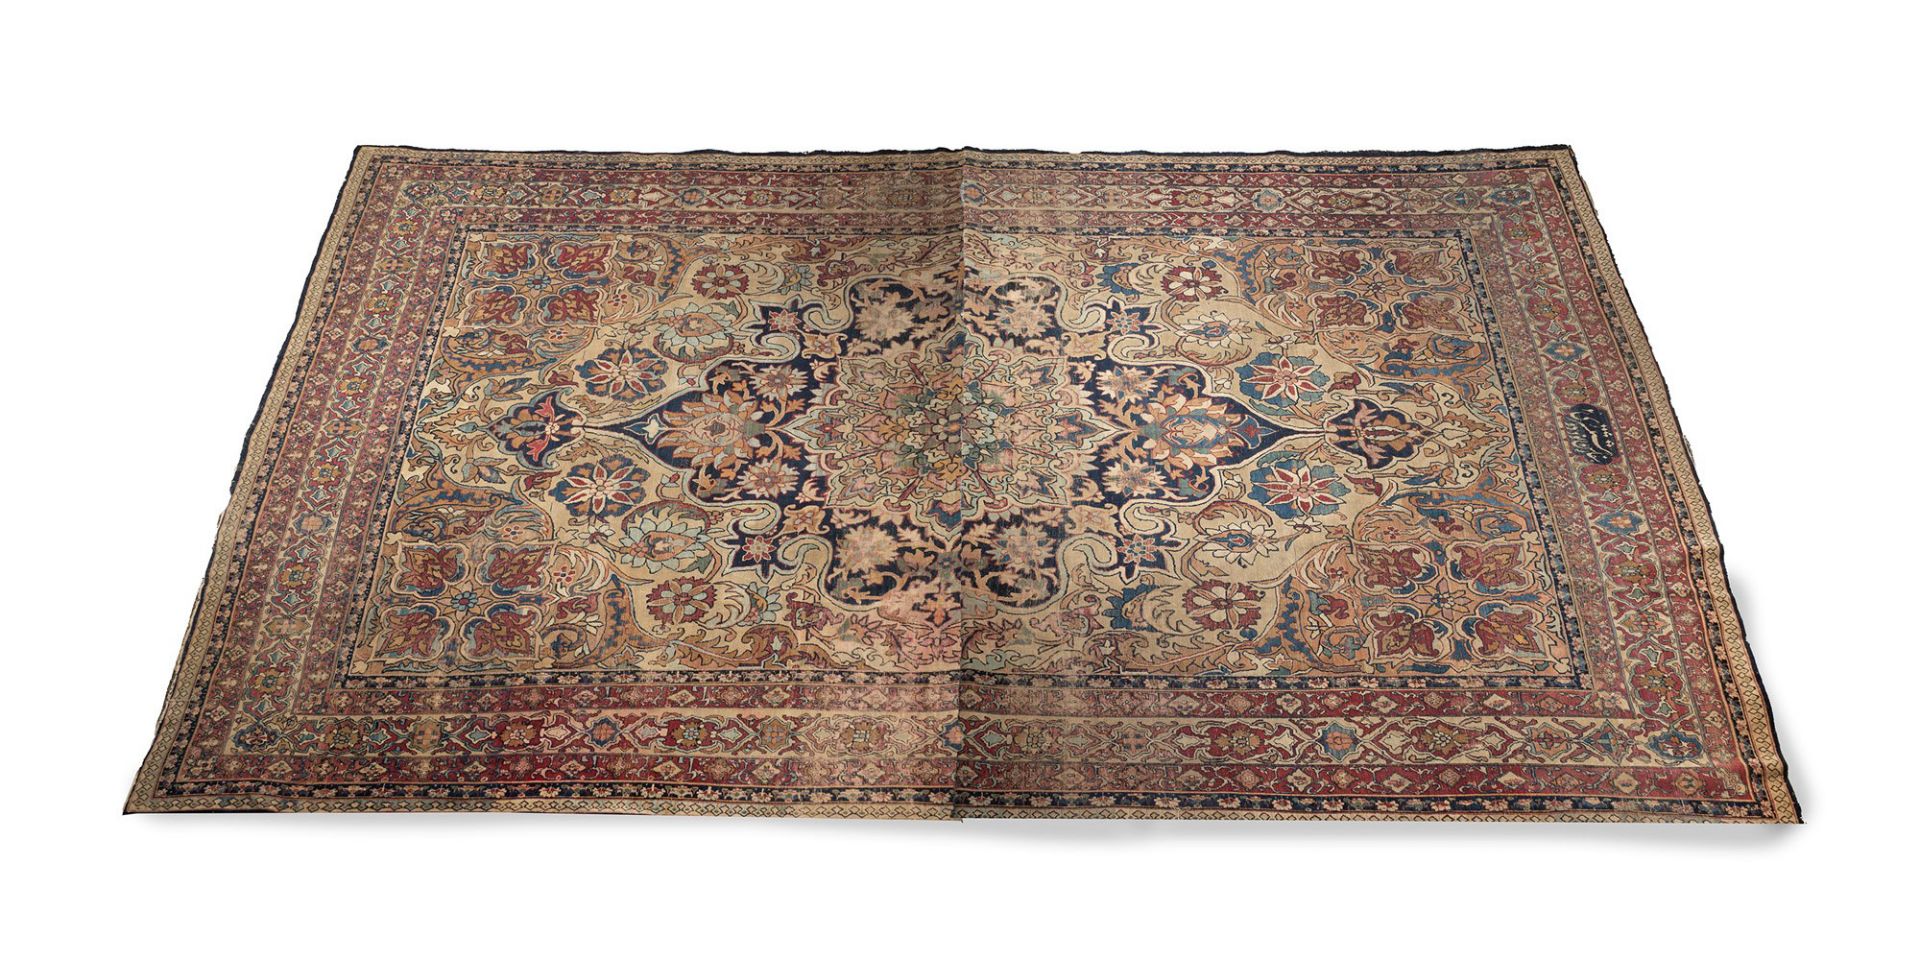 Kirman carpet, Persia, early 20th century